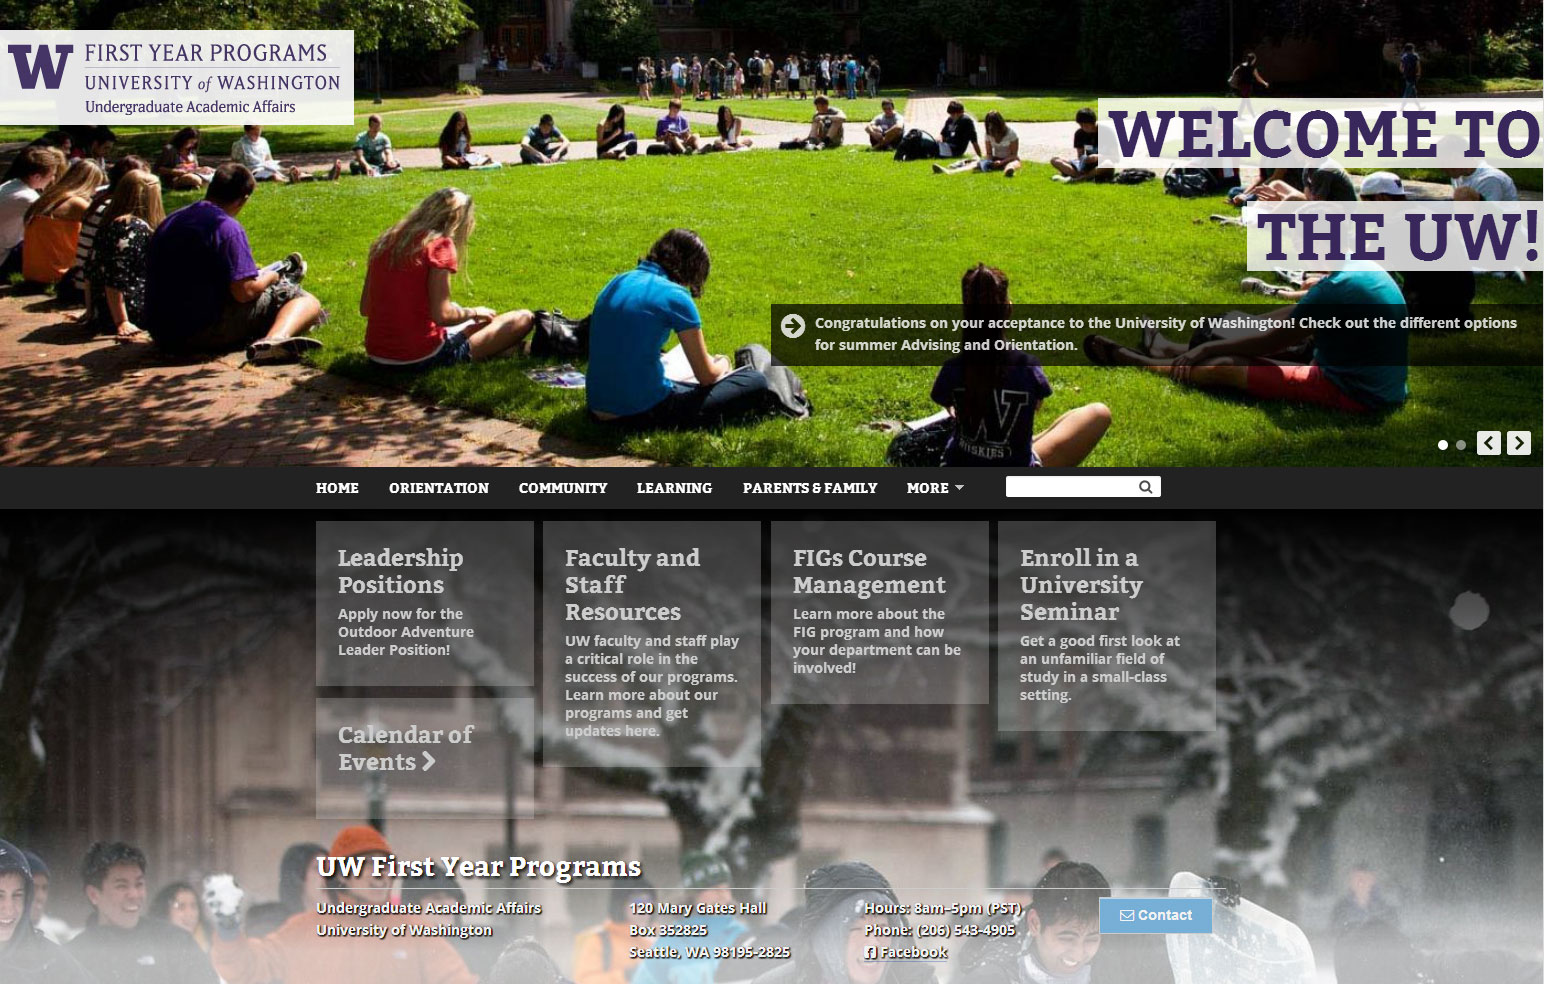 First Year Programs at the University of Washington